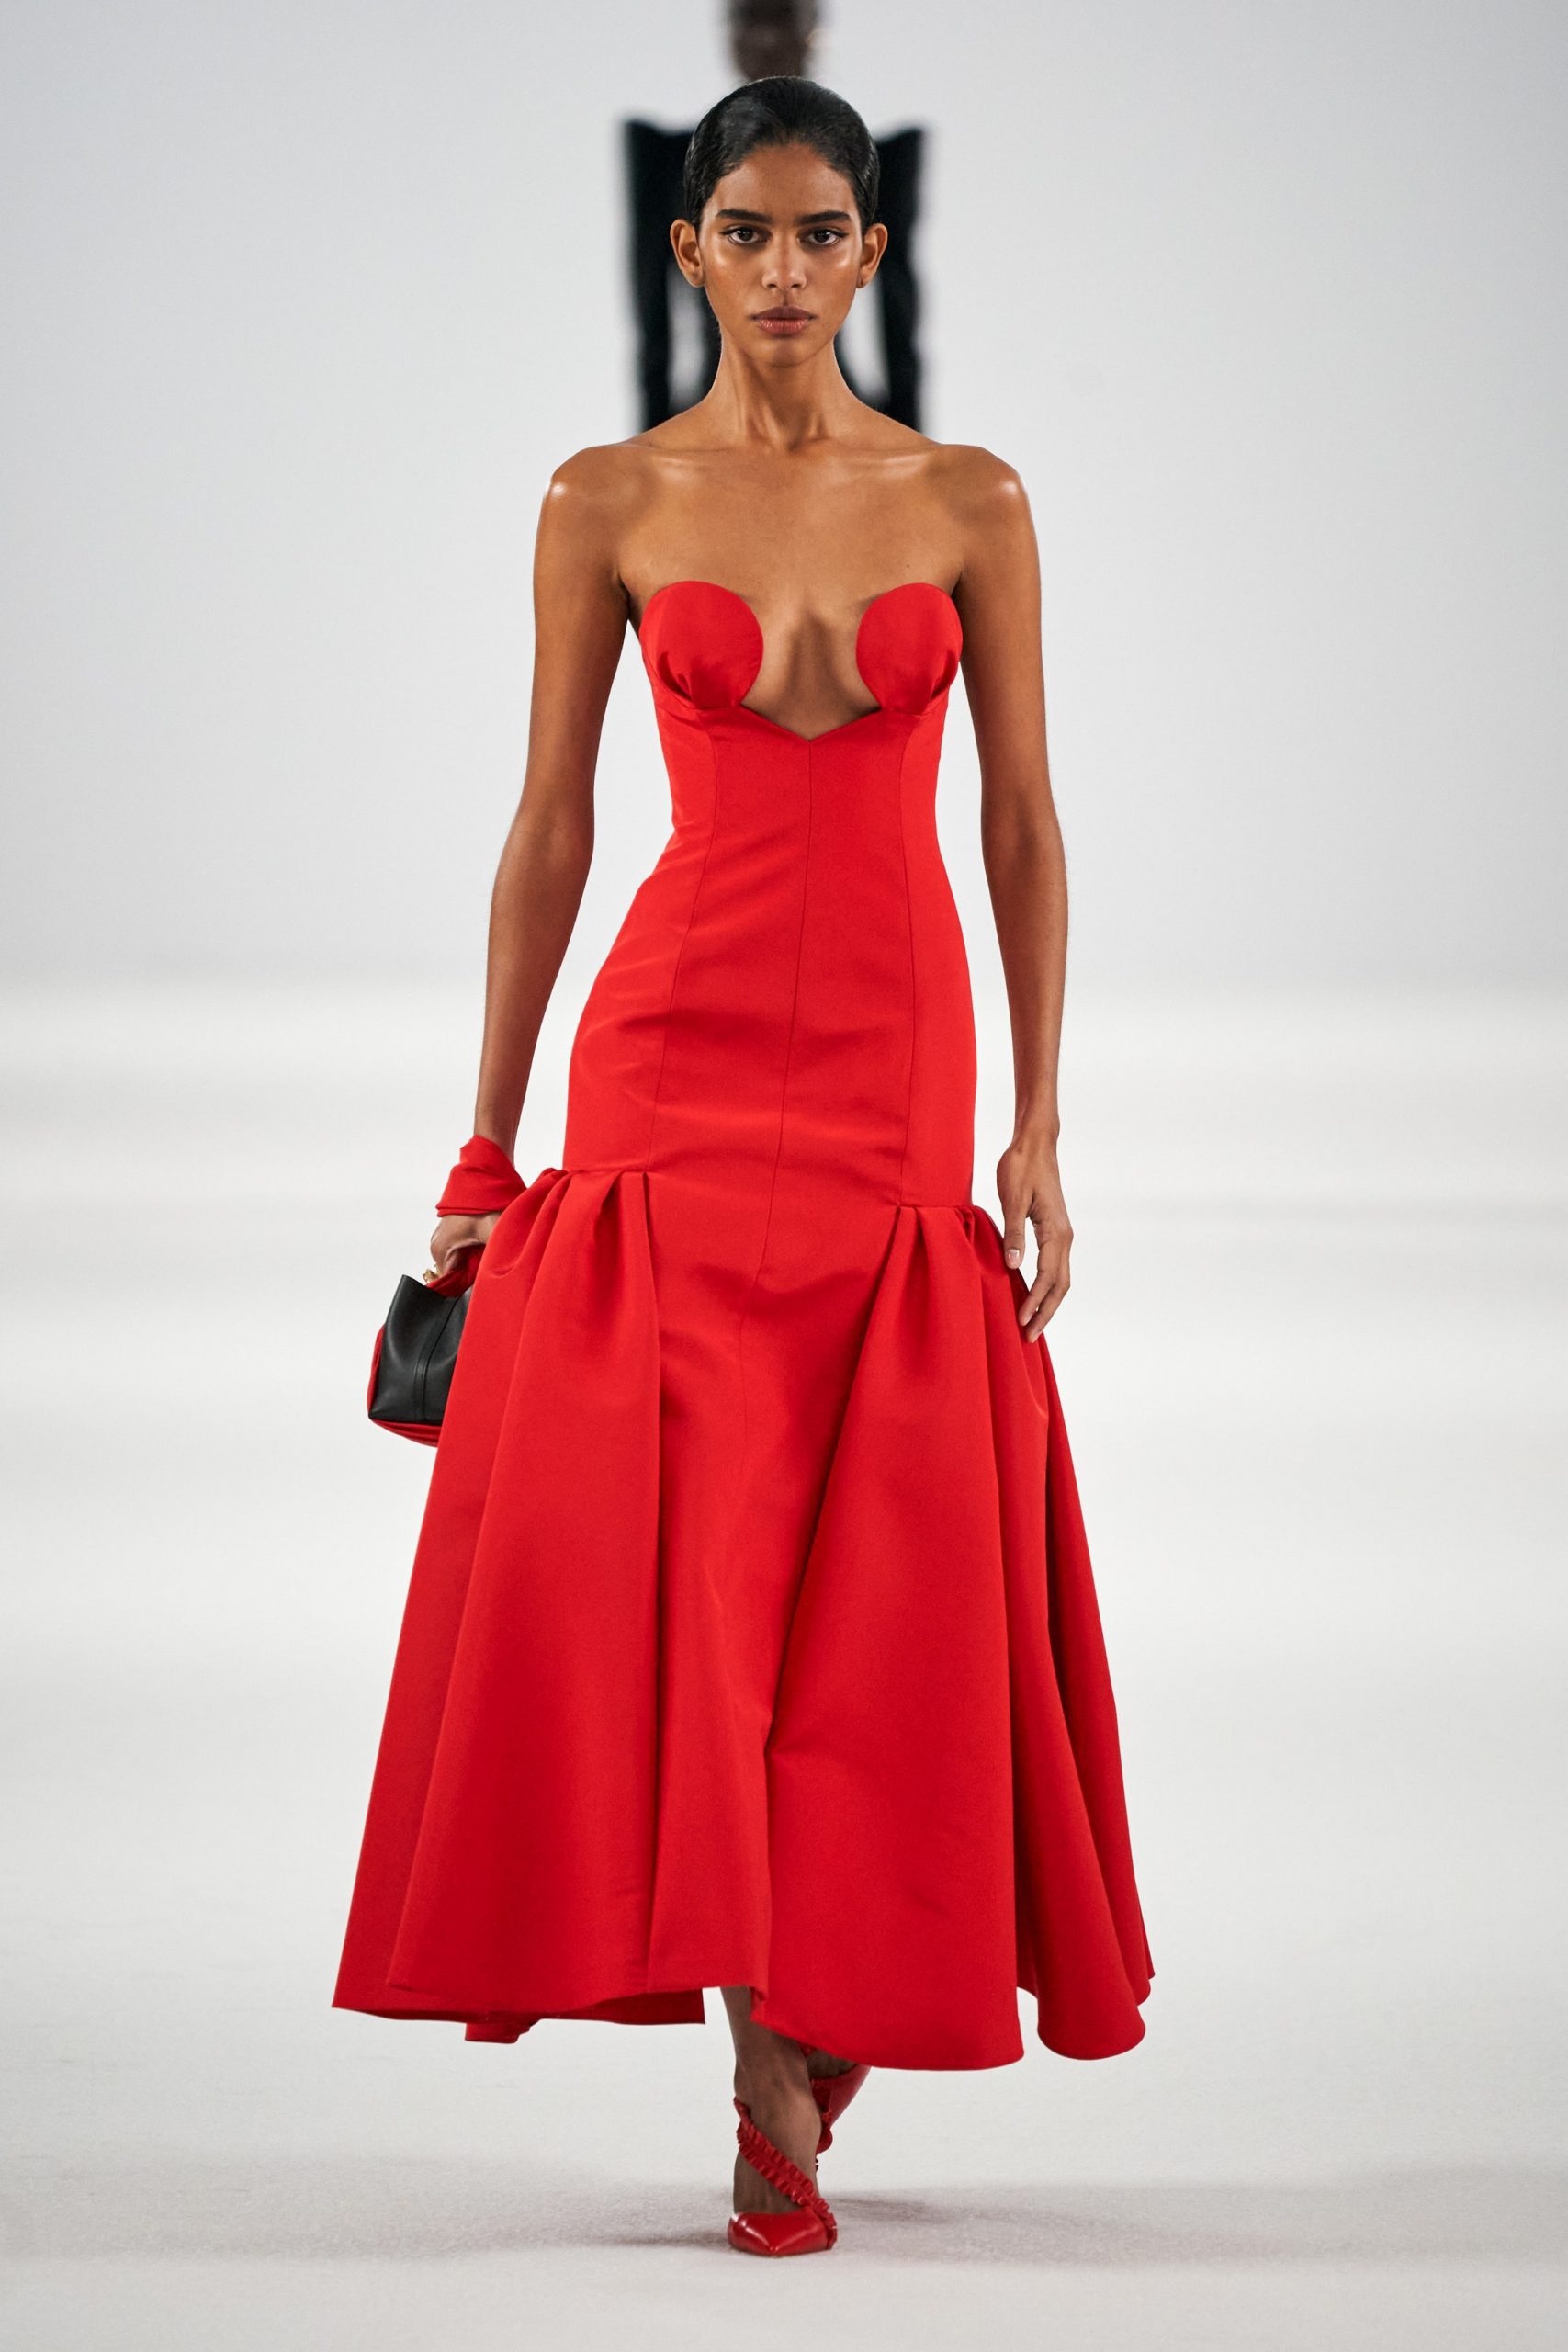 A model wears a glamorous red evening dress for Carolina Herrera F/W 2022